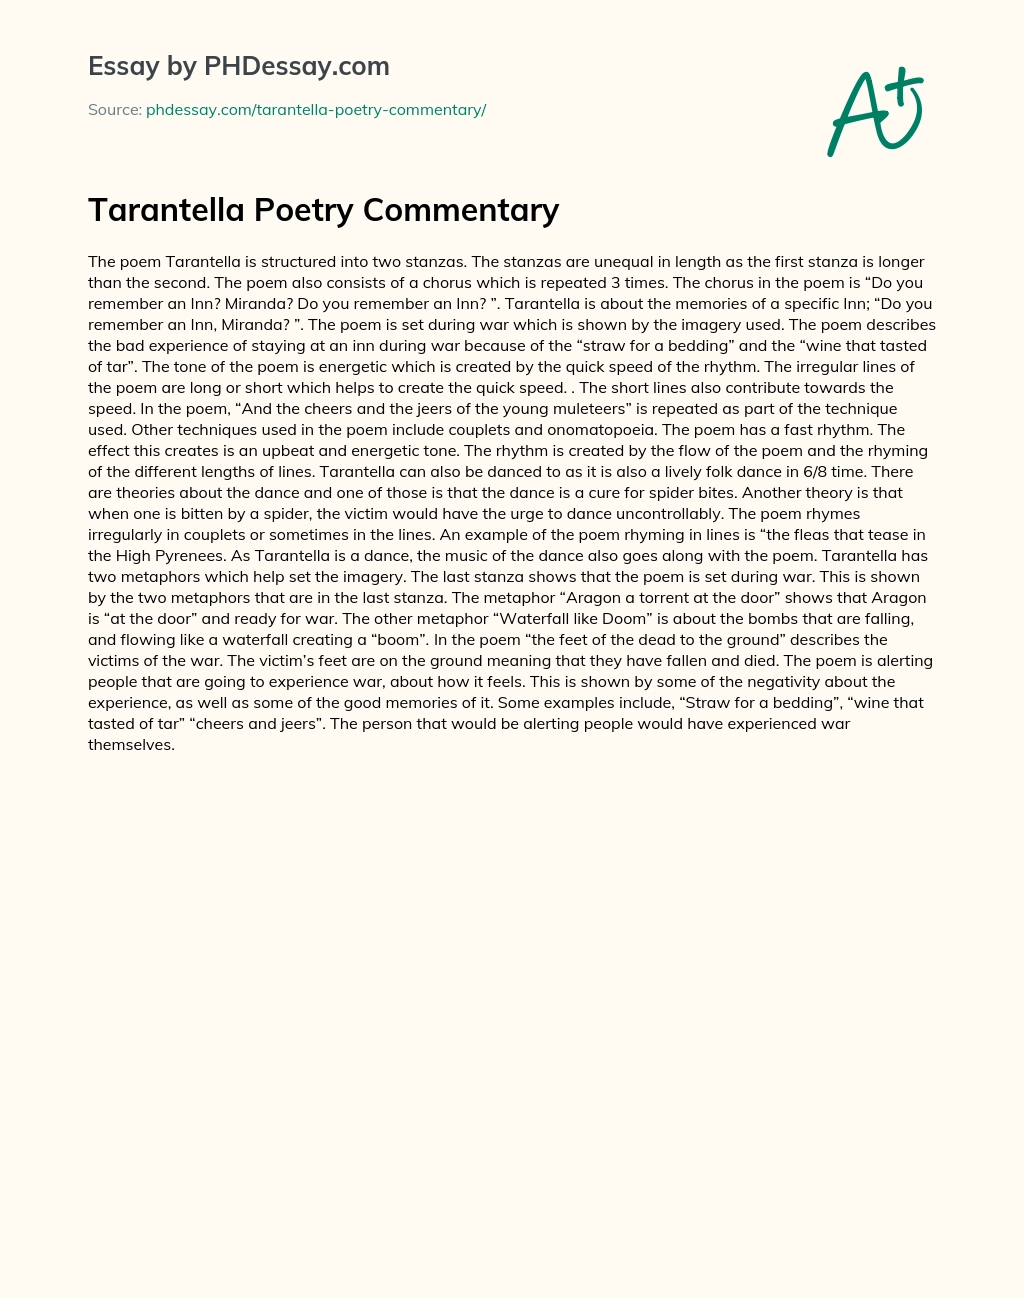 Tarantella Poetry Commentary essay